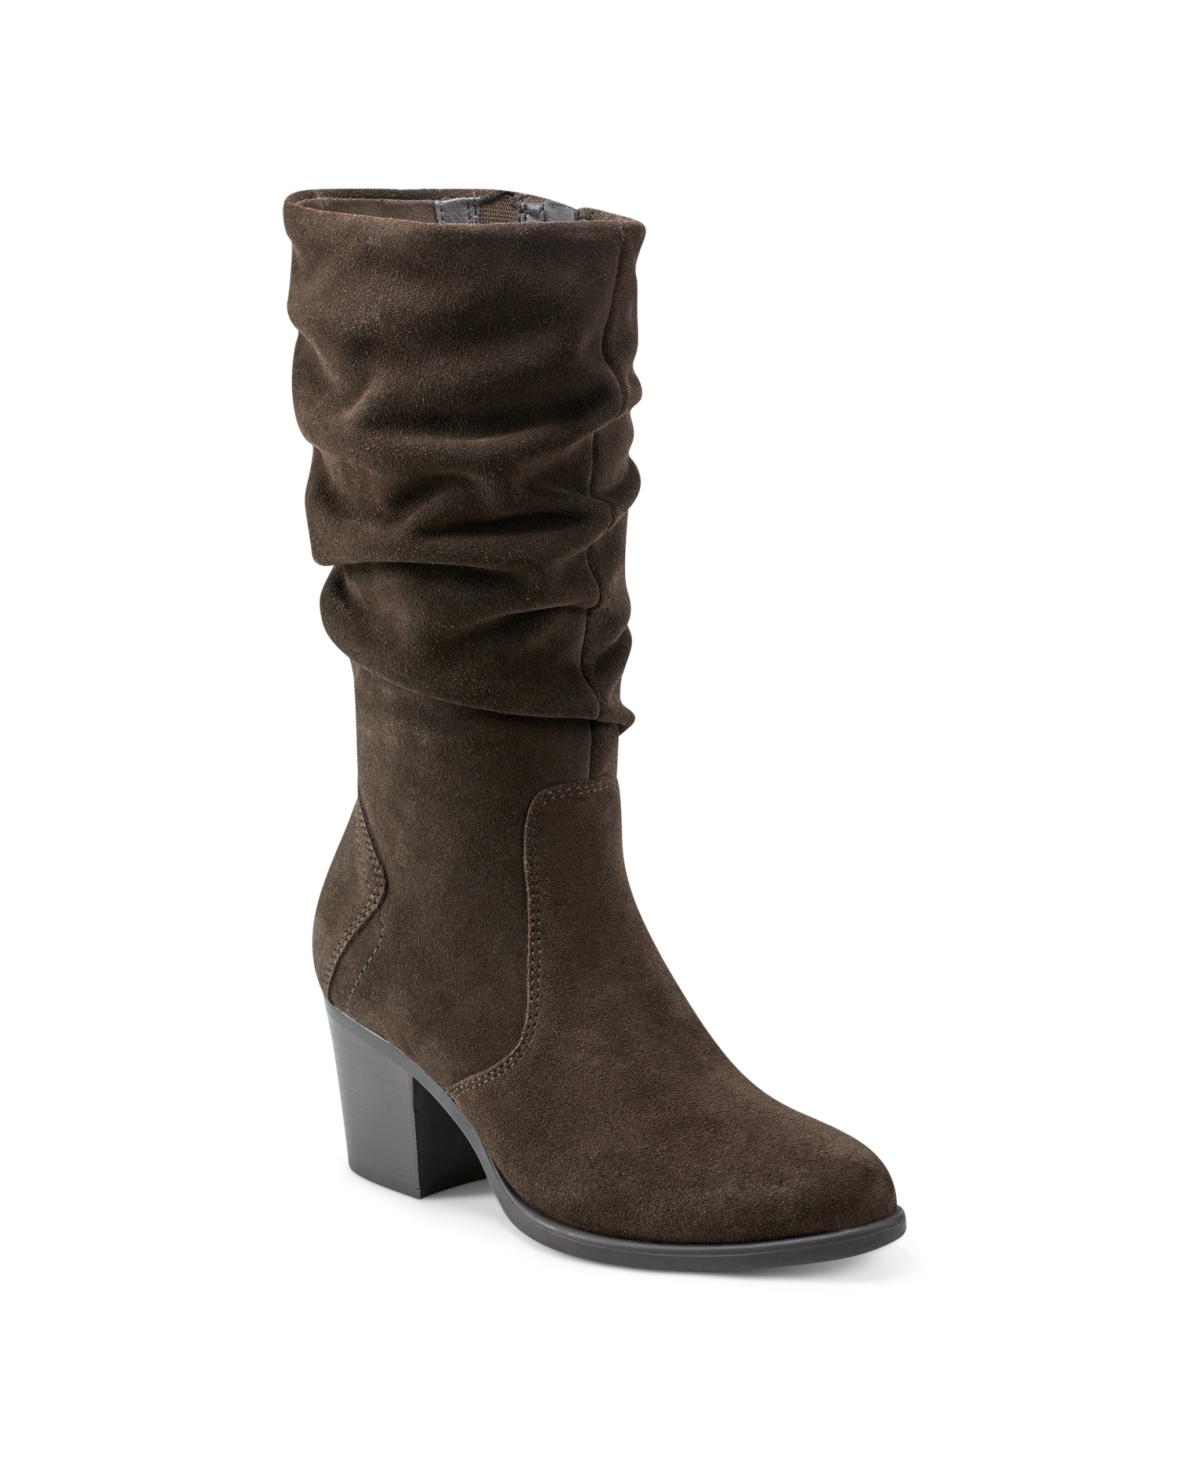 Earth Women's Vine Block Heel Almond Toe Narrow Calf Casual Boots - Taupe Suede